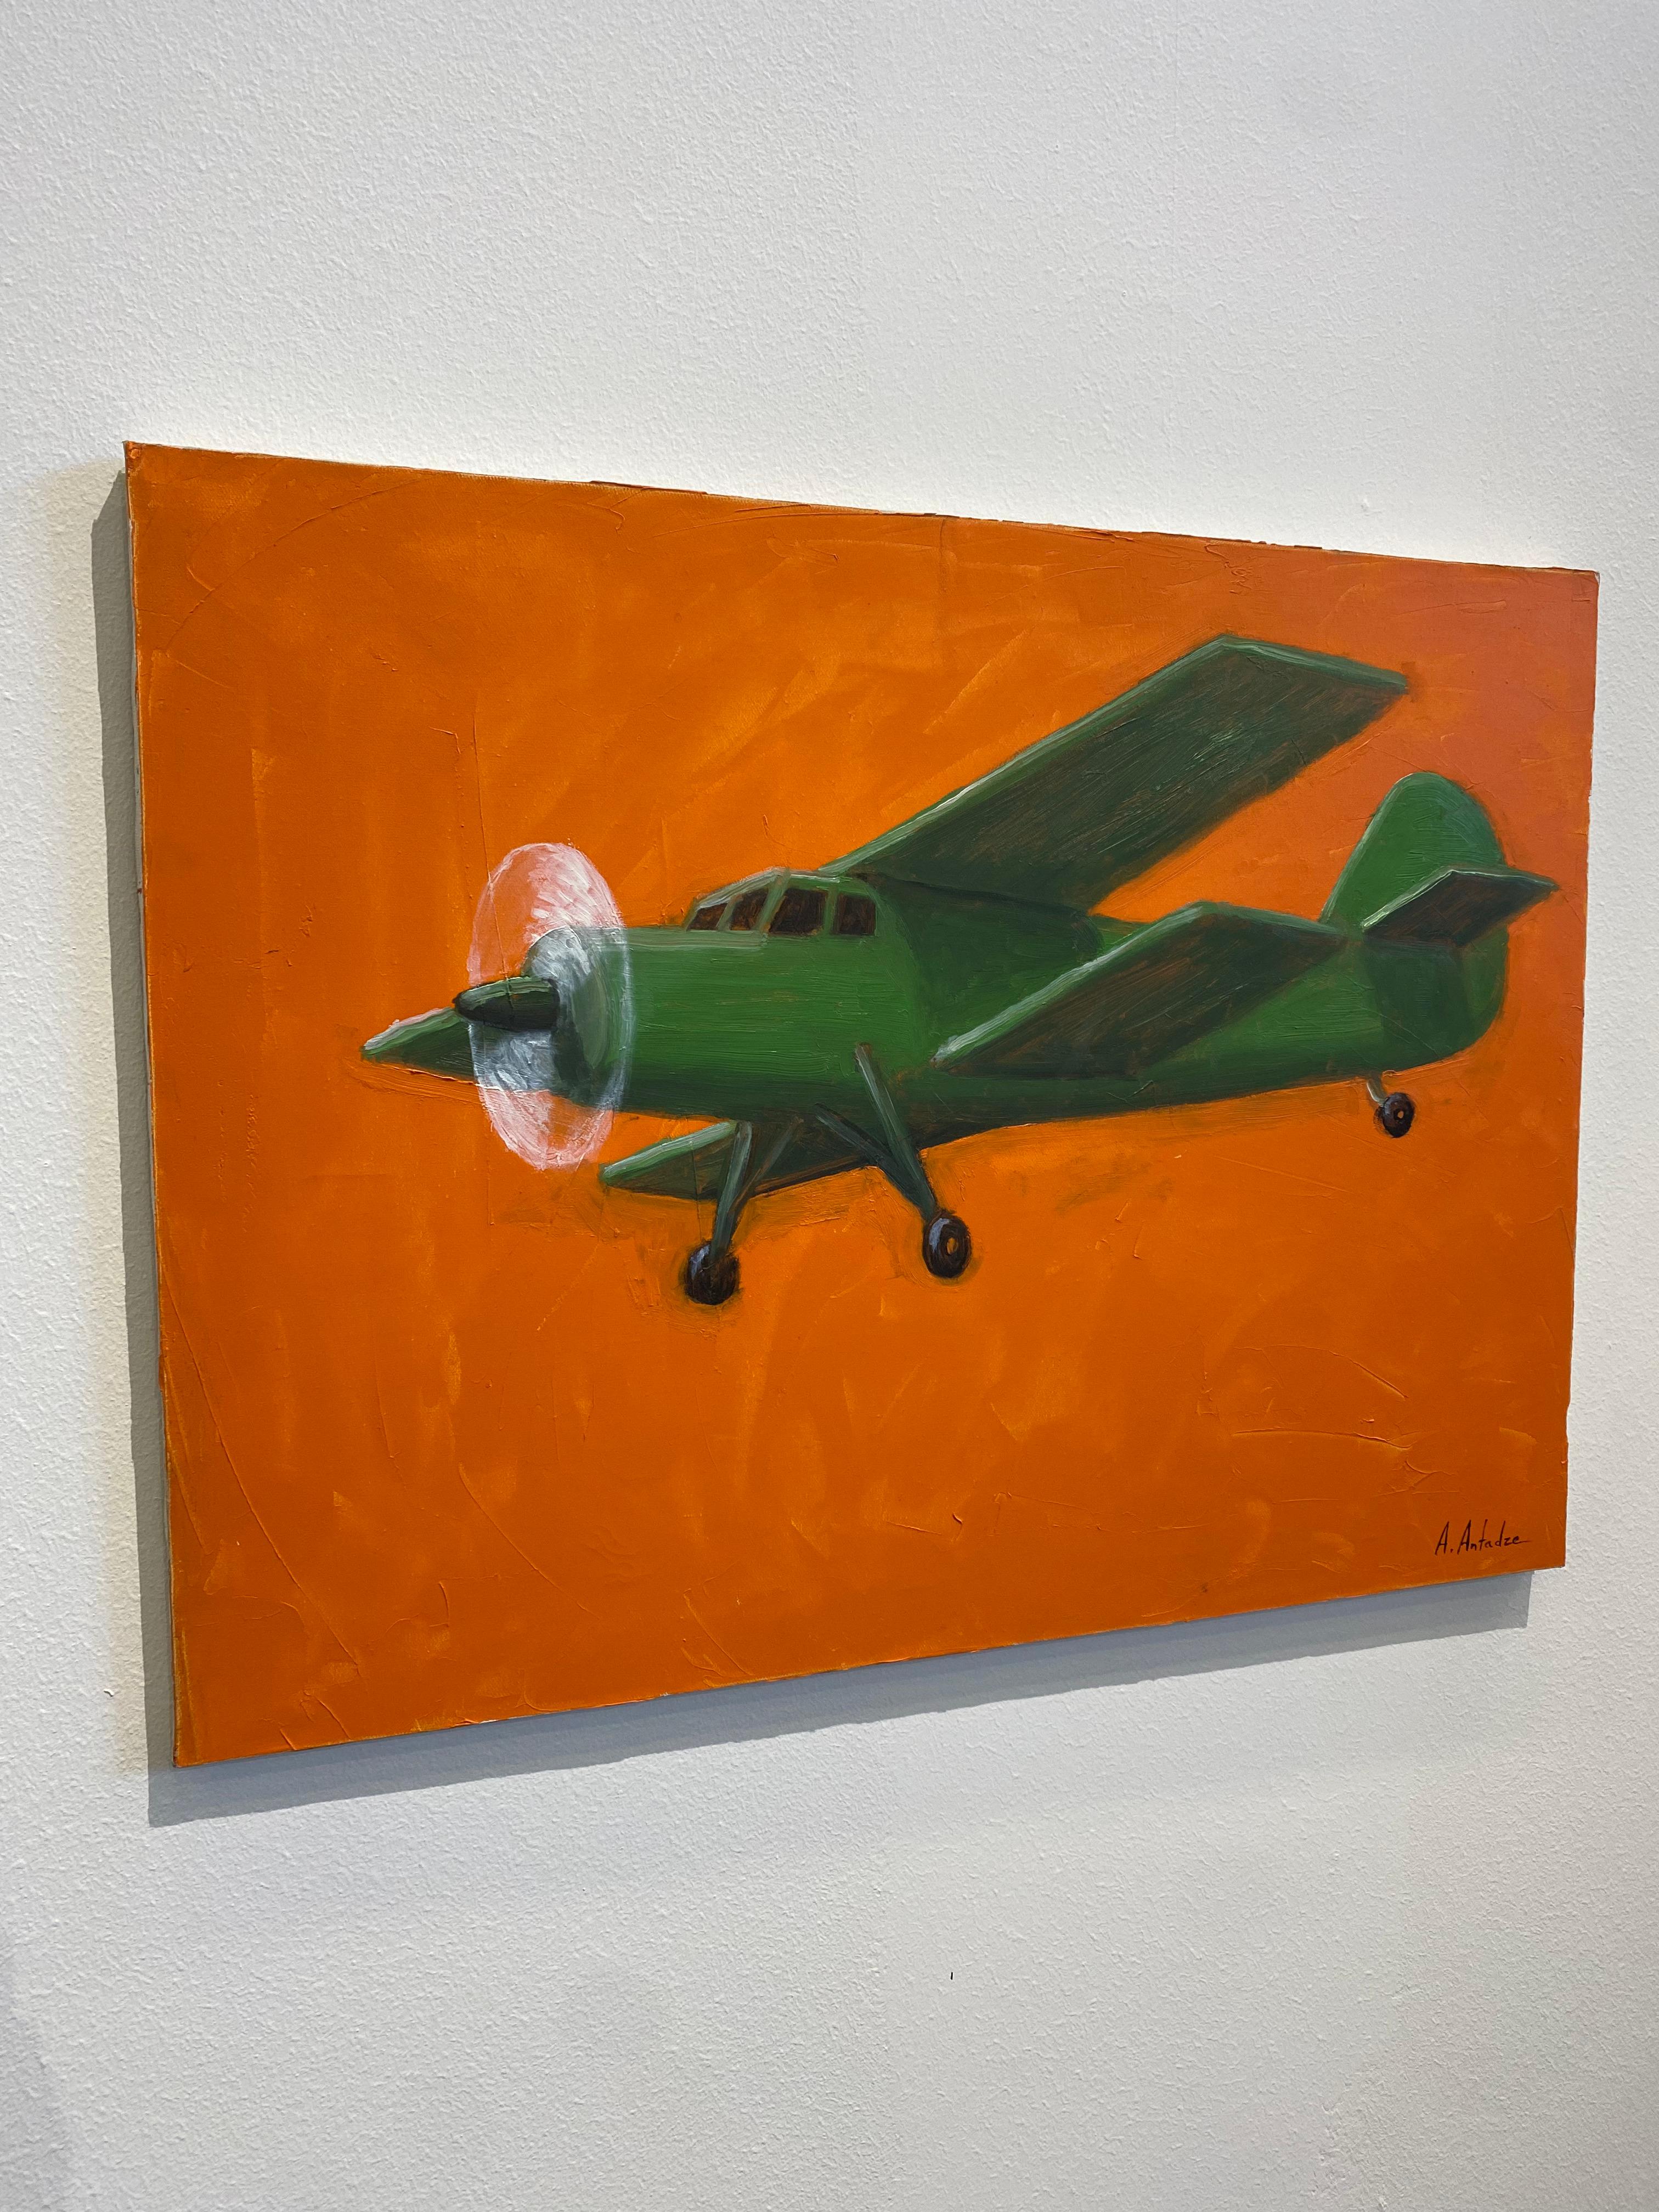 Georgian Contemporary Art by Alexander Sandro Antadze - Green Plane For Sale 8